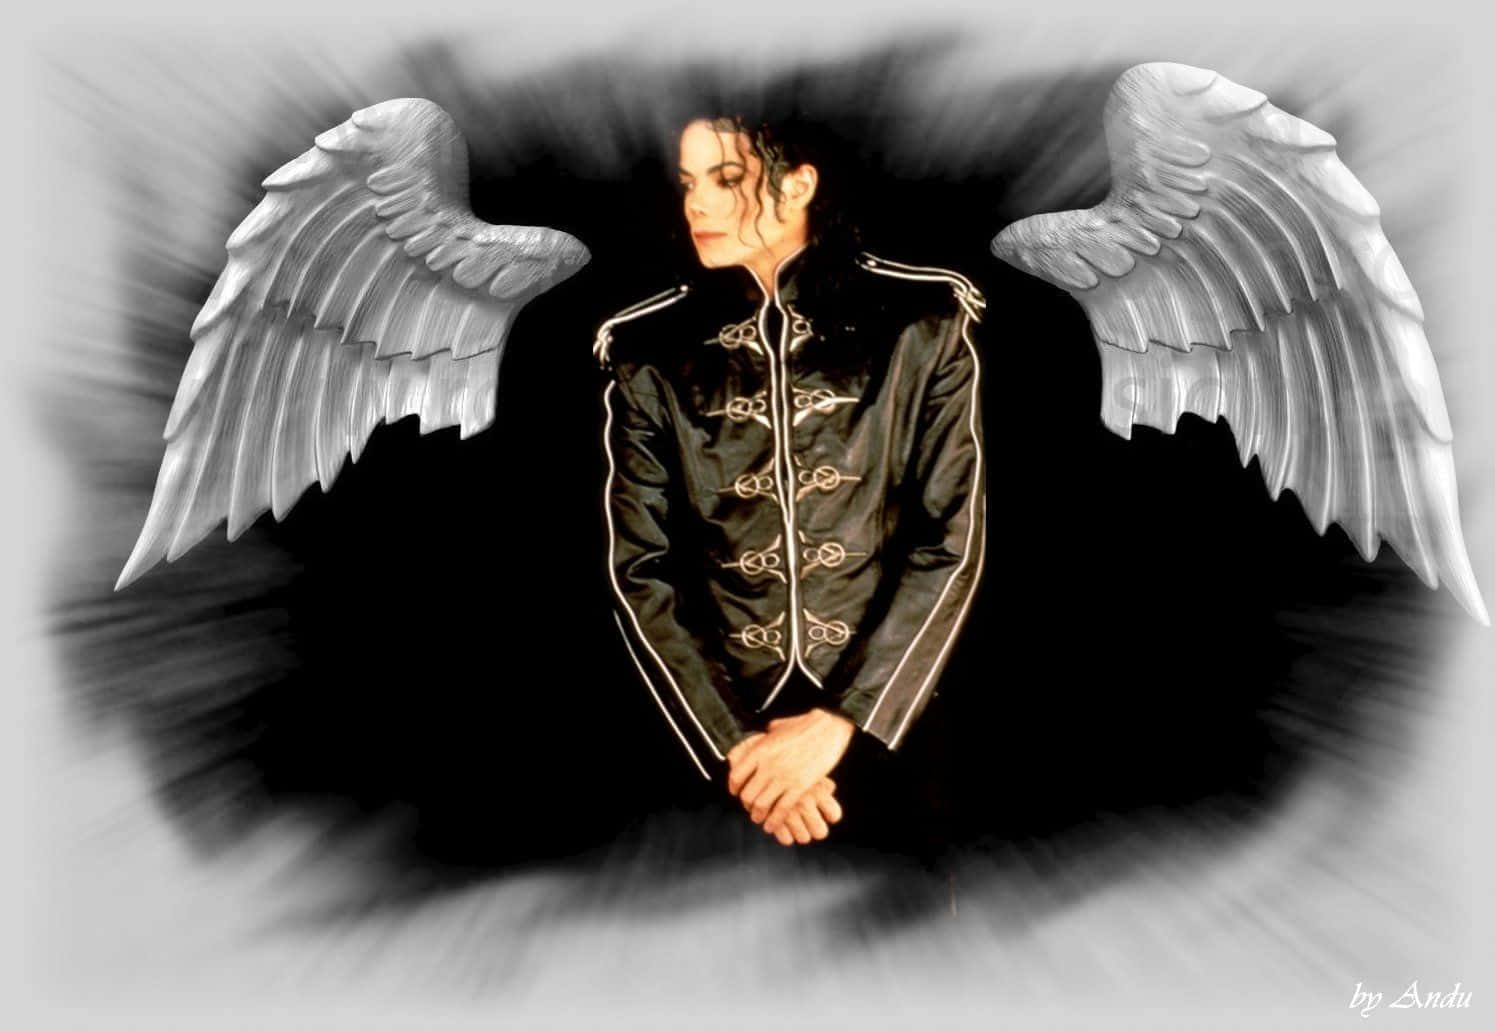 The King Of Pop - Michael Jackson Iphone Wallpaper Wallpaper